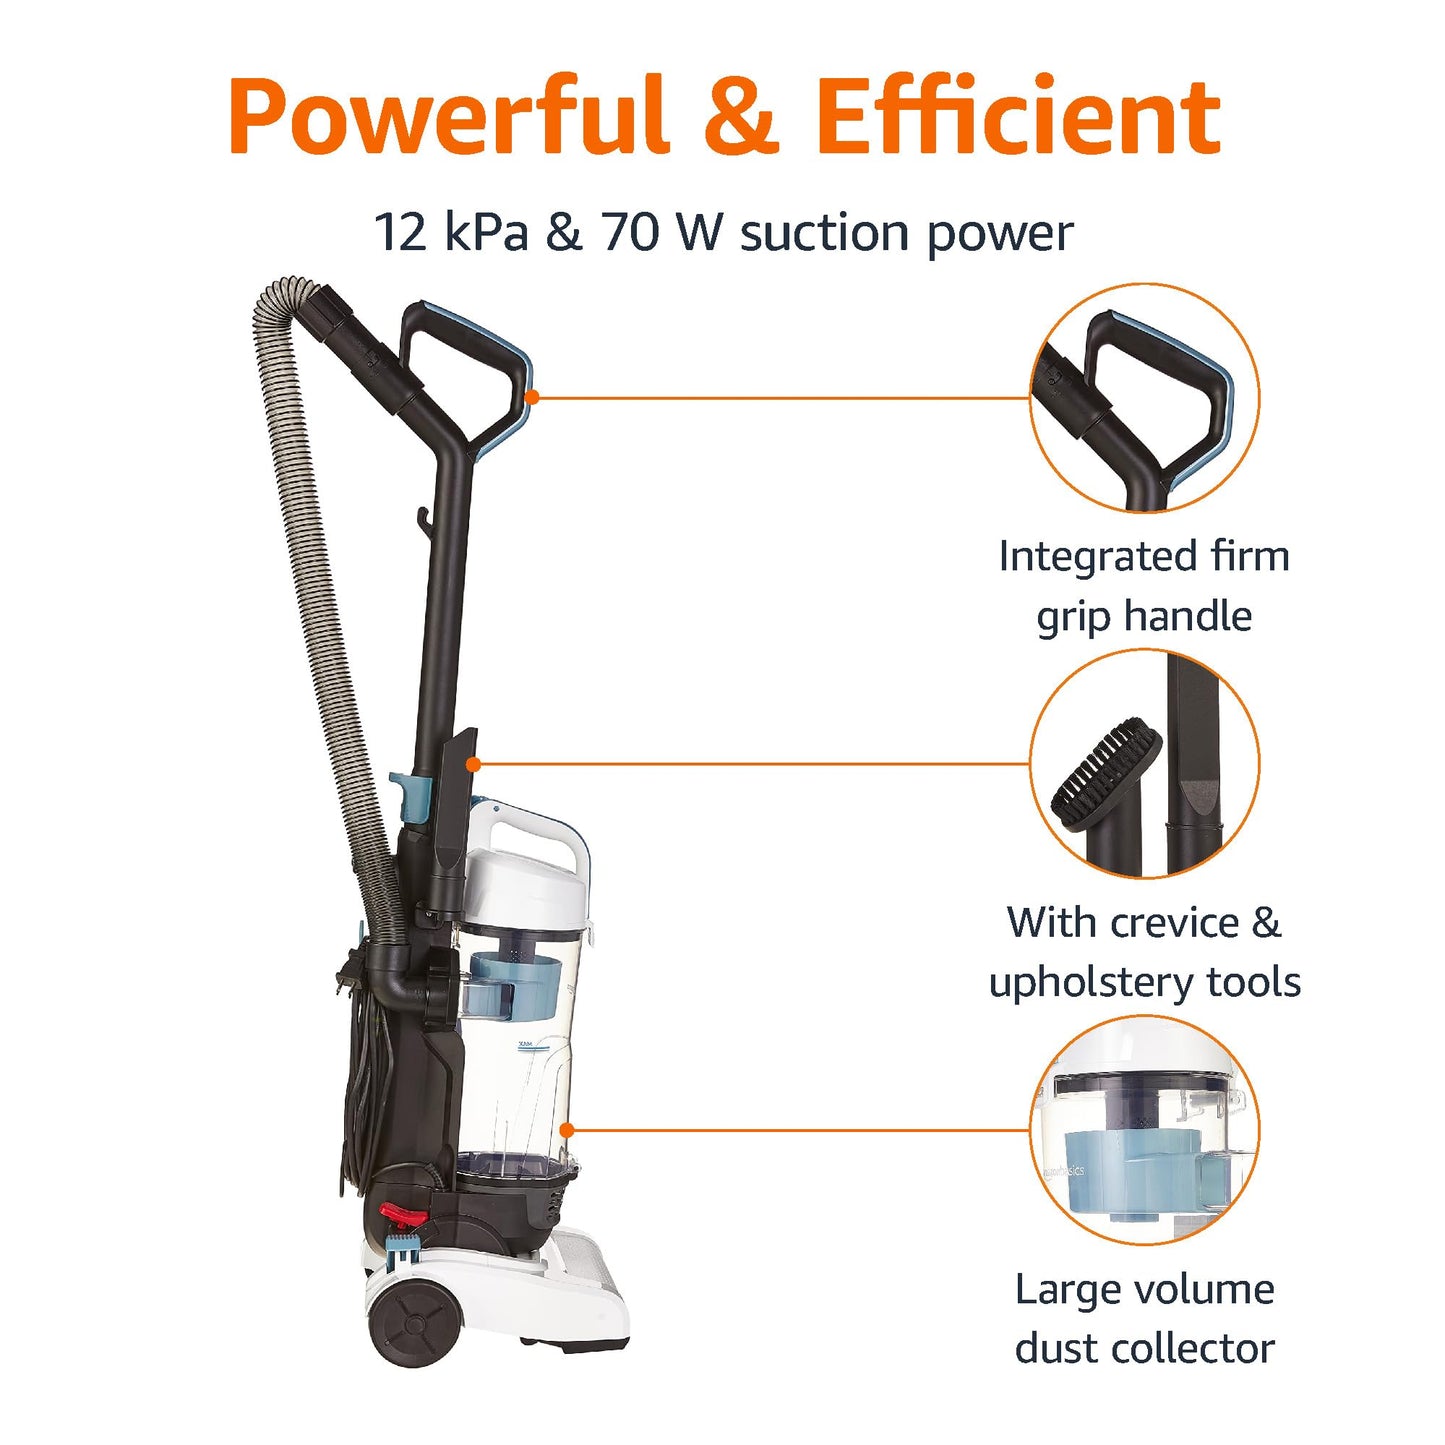 Amazon Basics Upright Bagless Lightweight Vacuum Cleaner, Black and White